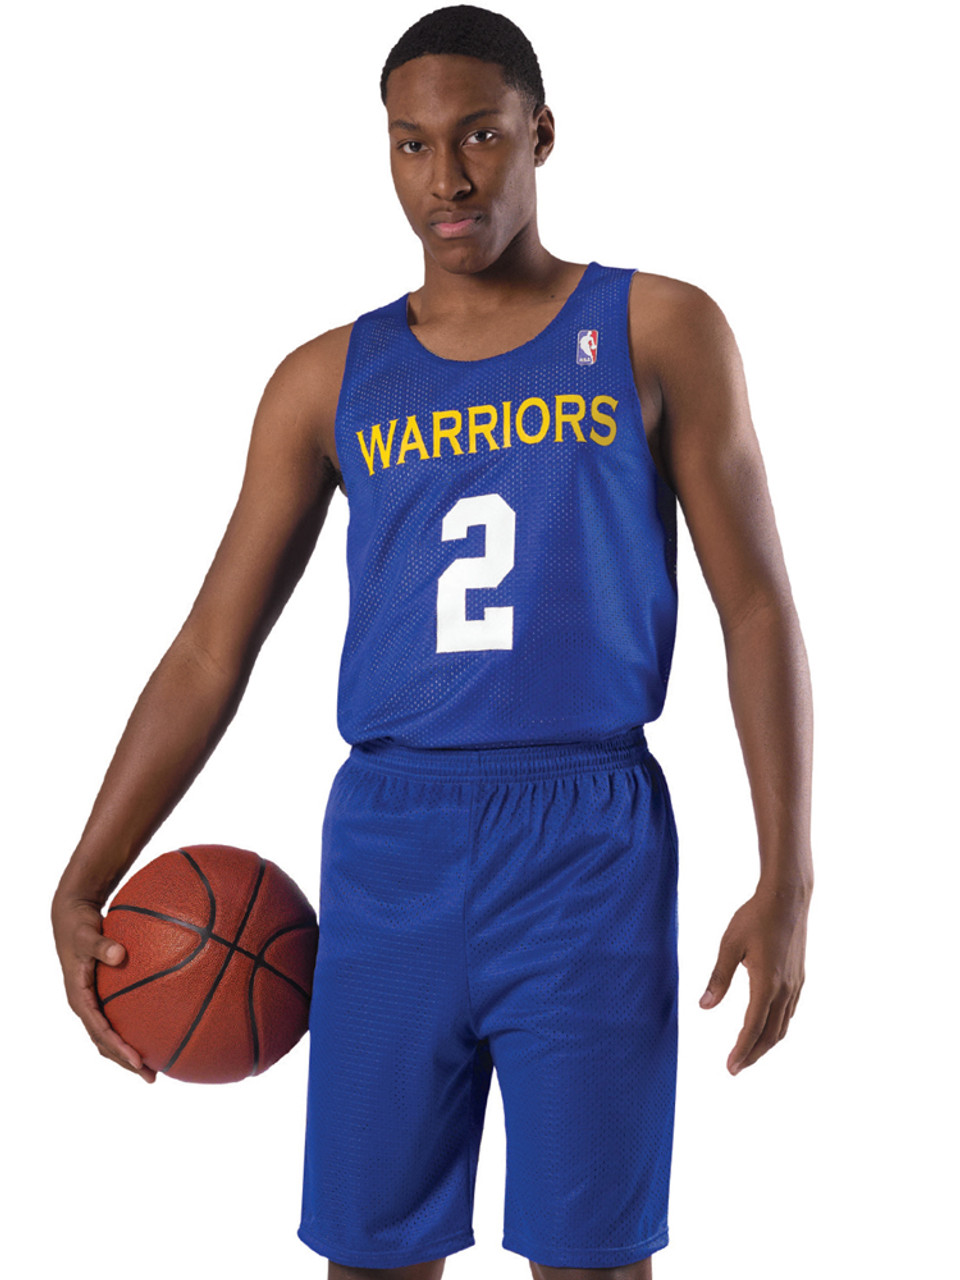 Adult NBA Replica Reversible Basketball Jersey - All Sports Uniforms